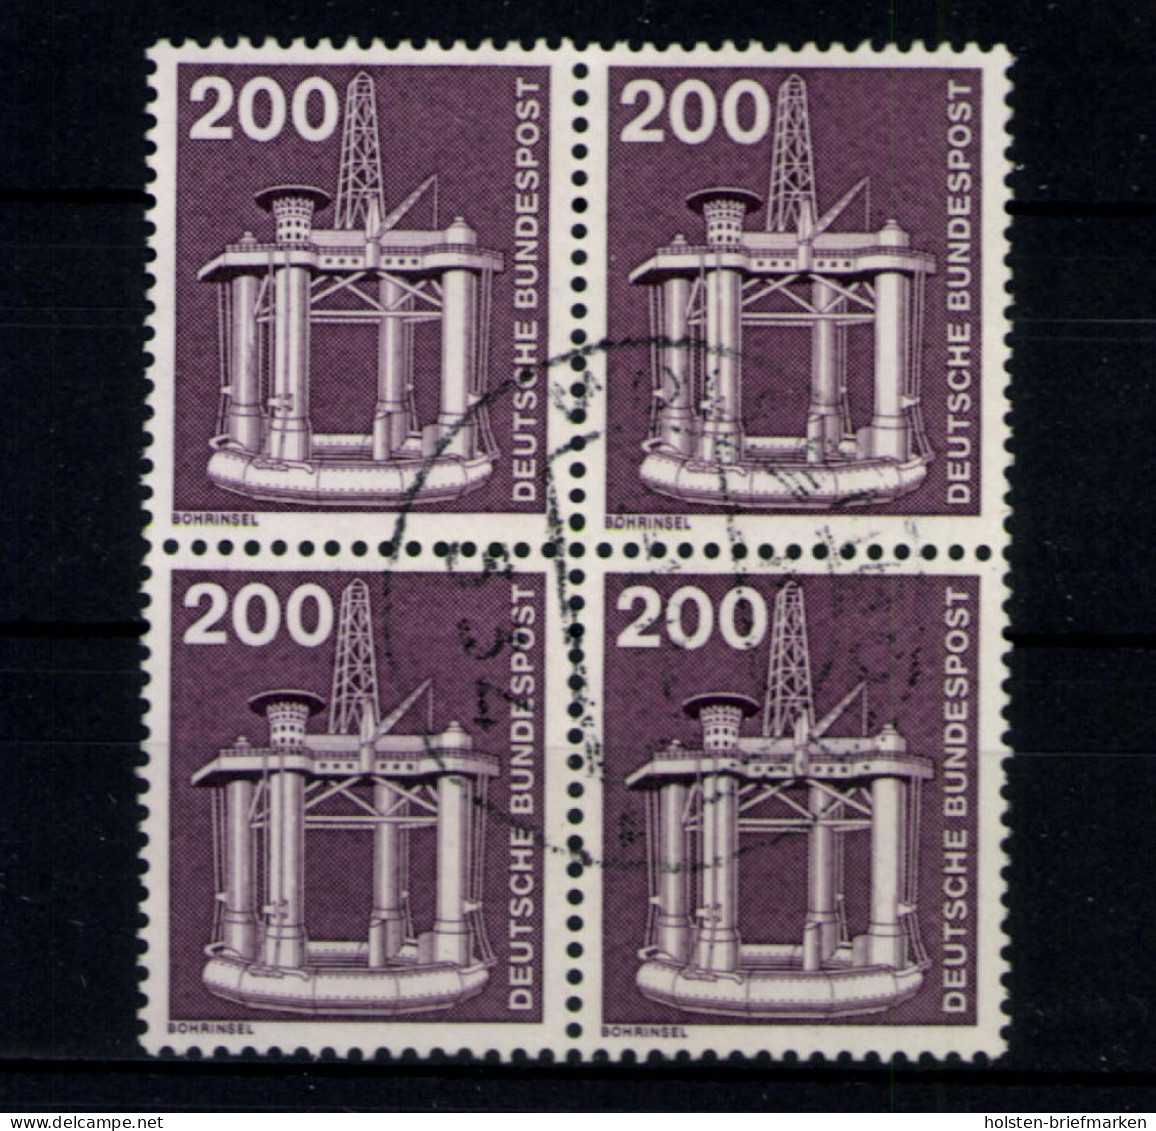 Deutschland (BRD), MiNr. 858, Viererblock, Gestempelt - Used Stamps